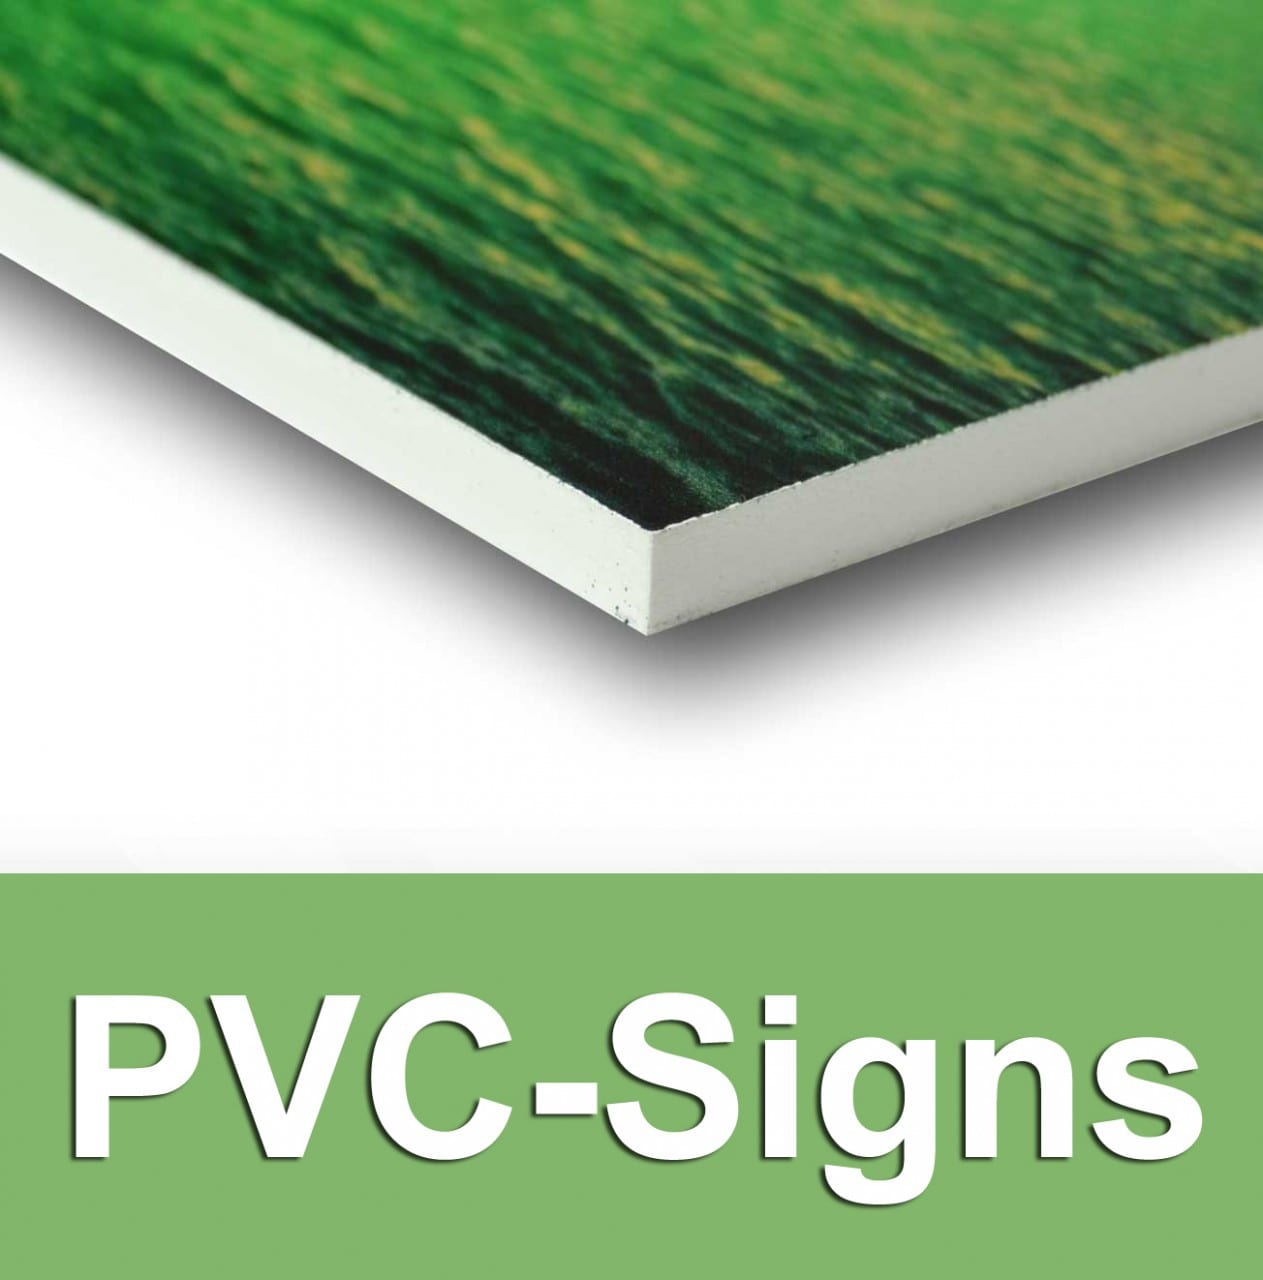 PVC signs